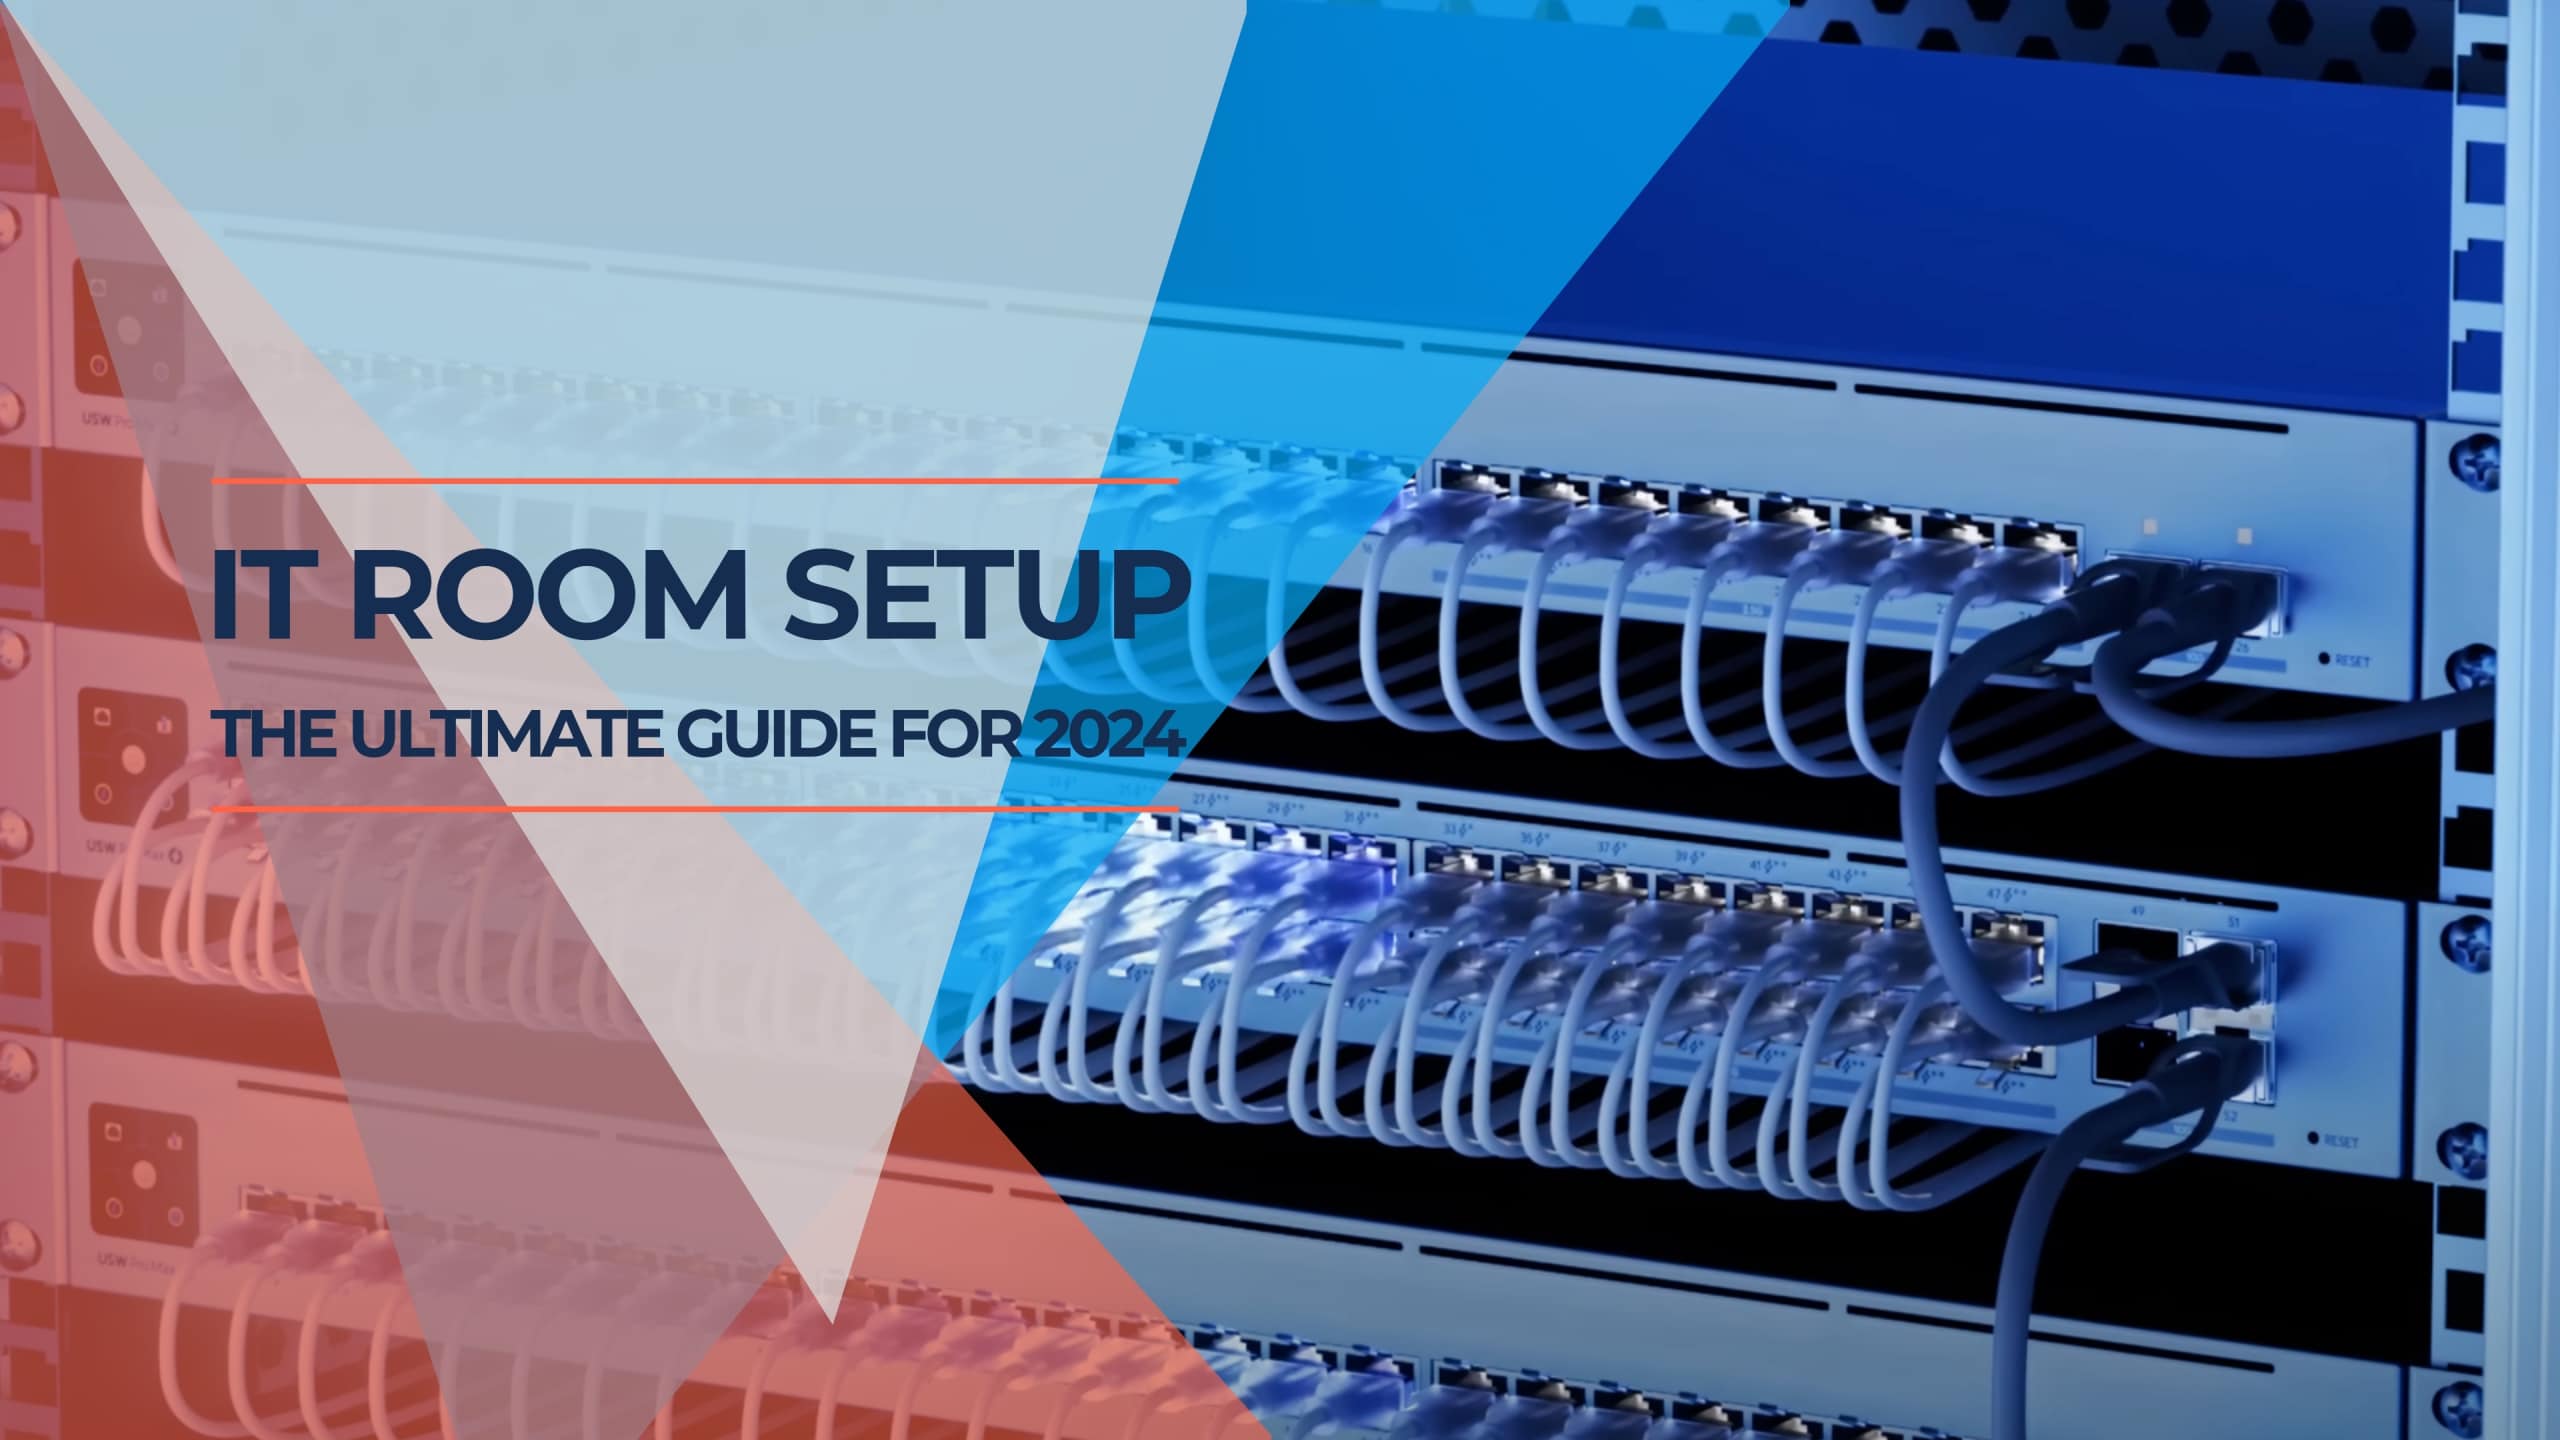 IT Room and Server Room Setup Guide 2024